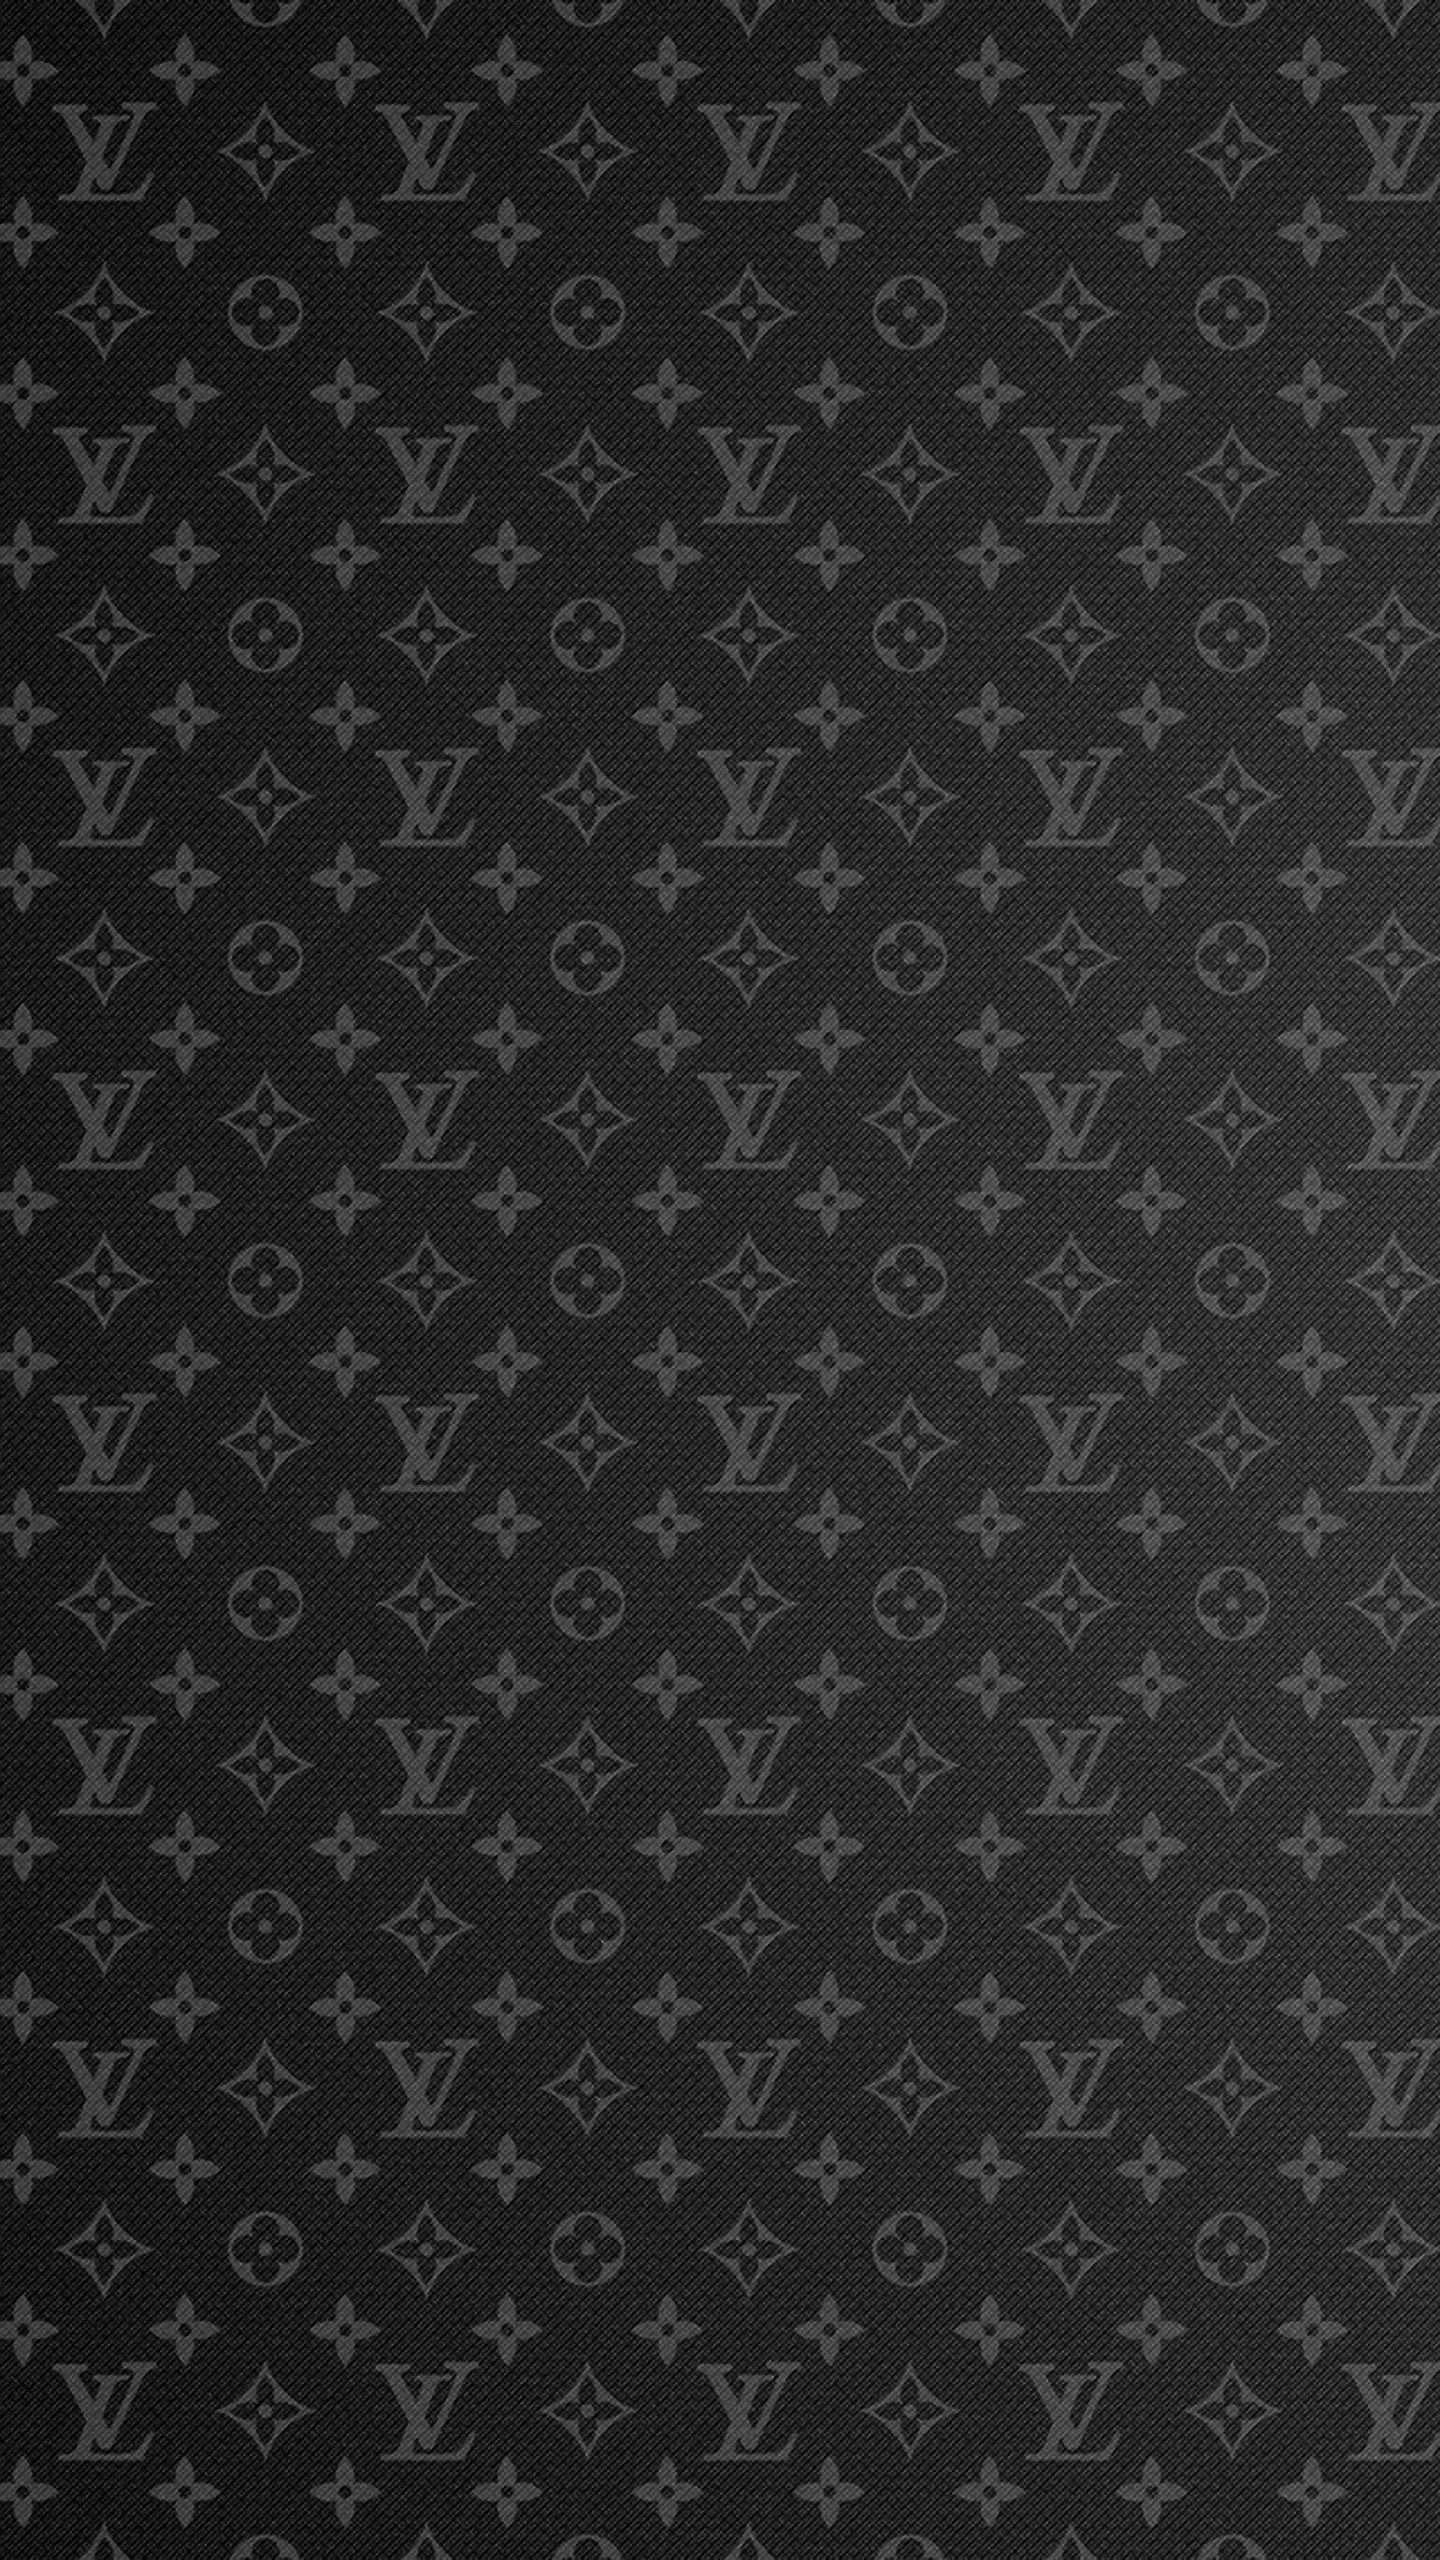 Louis Vuitton iPhone Wallpapers - Top Free Louis Vuitton ...